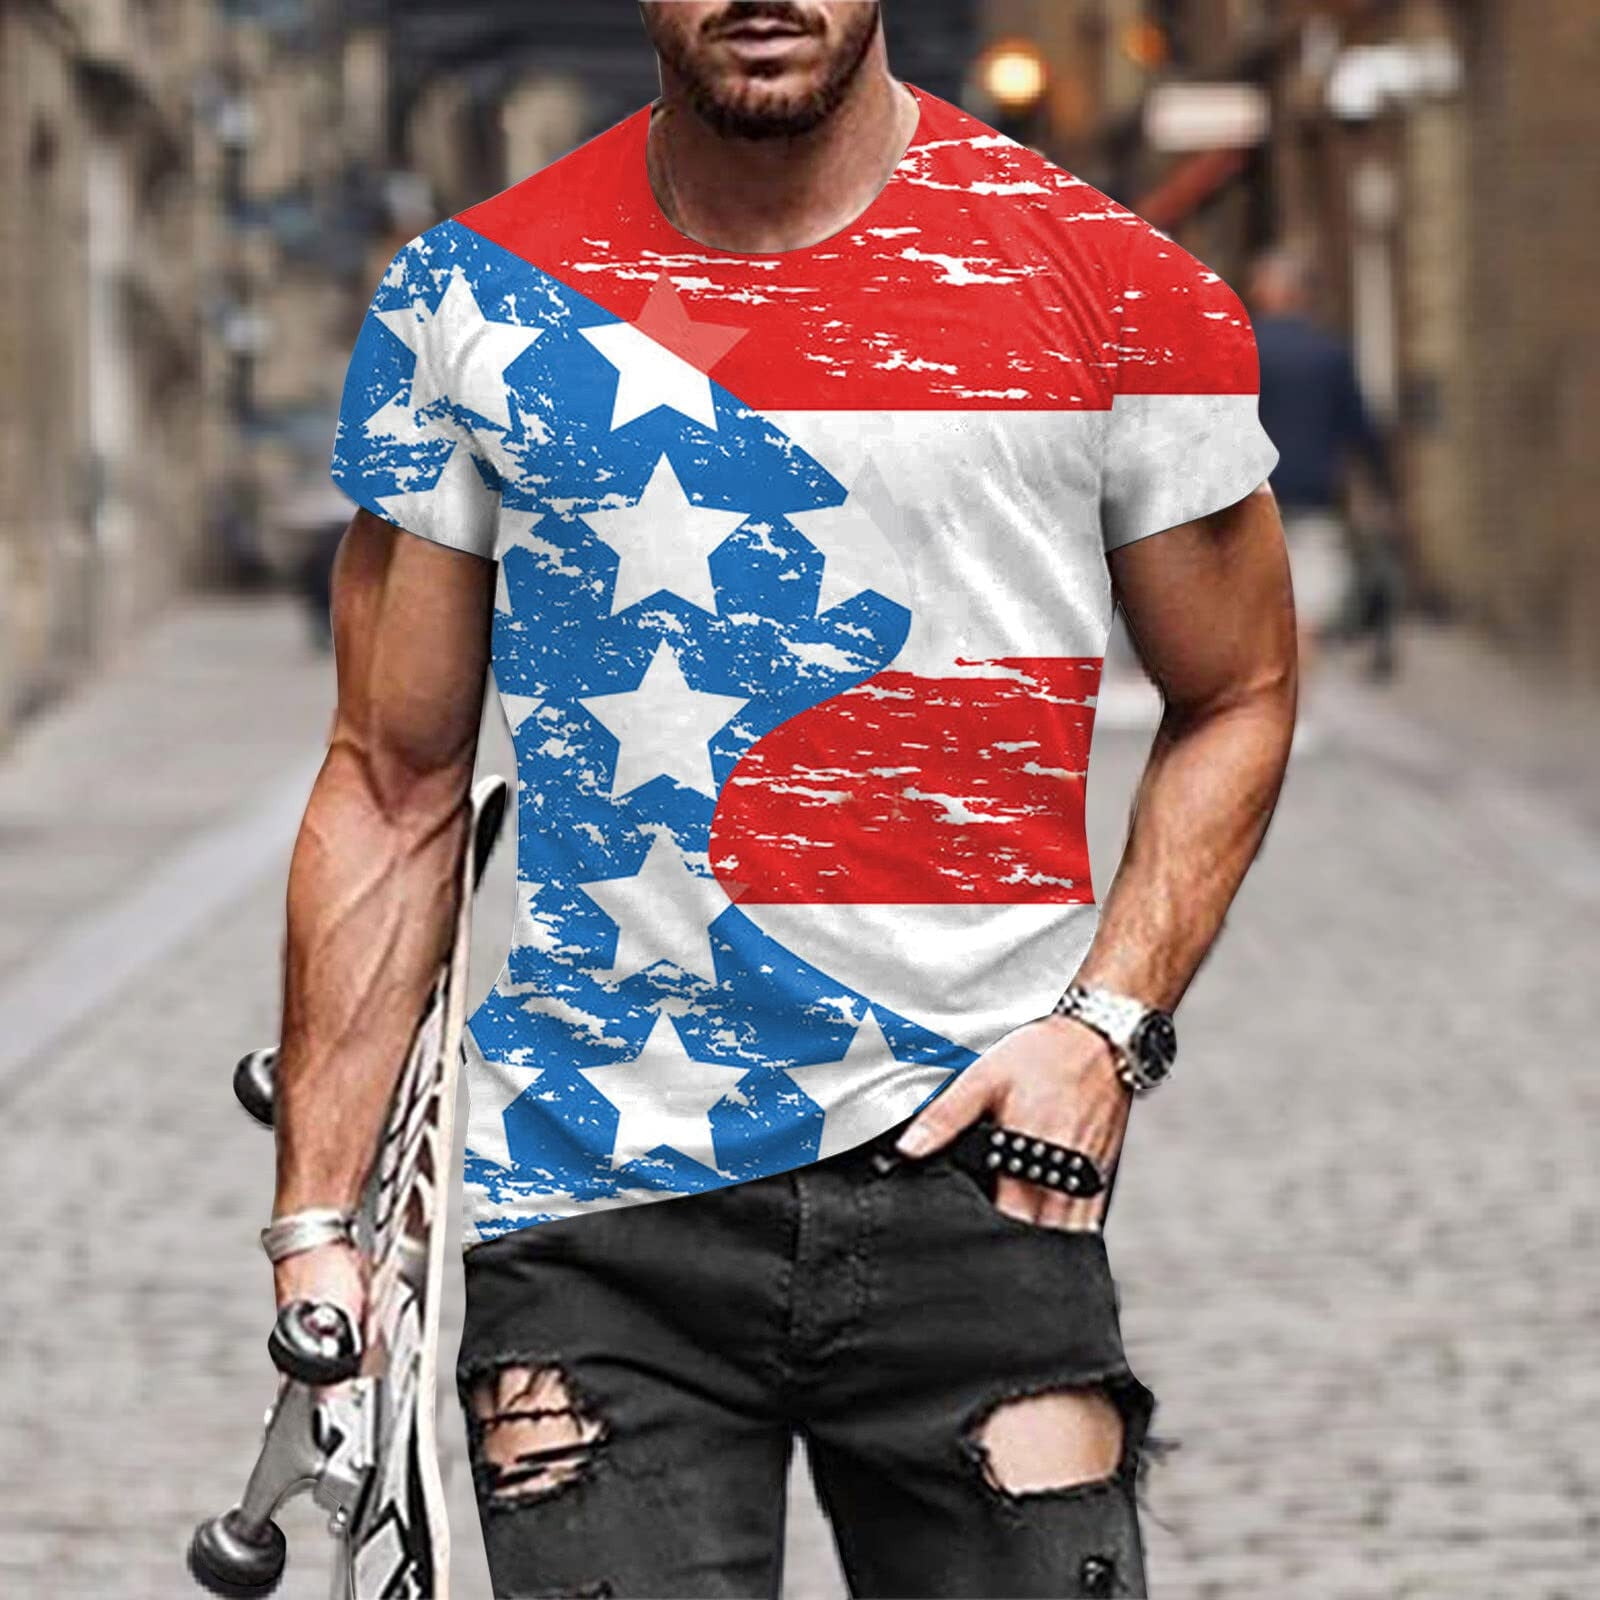 USA T-Shirts - Men's